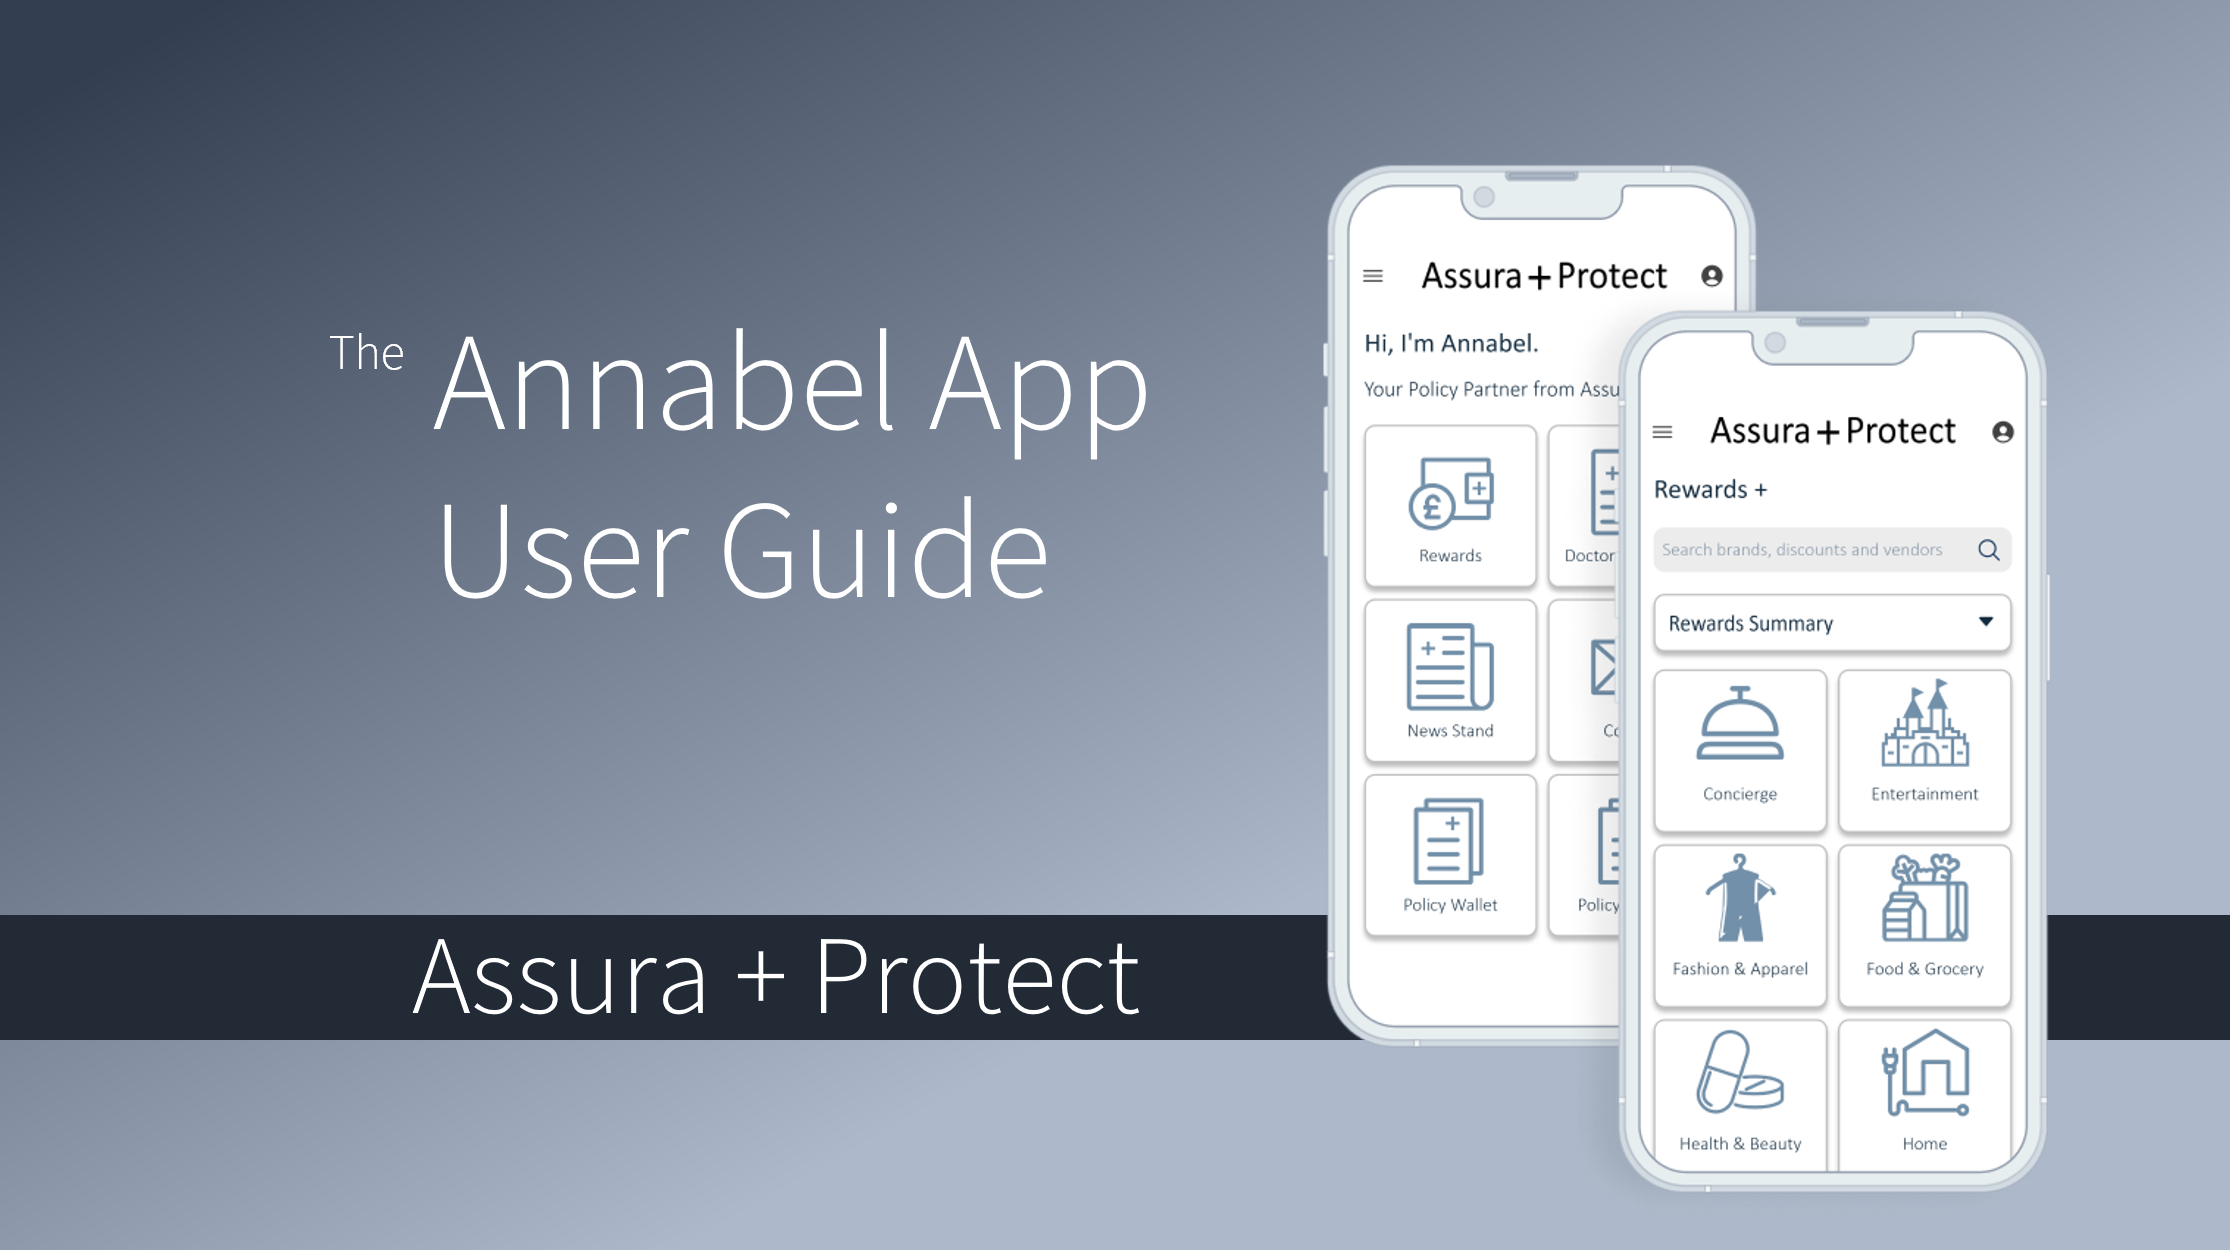 The Annabel App User Guide